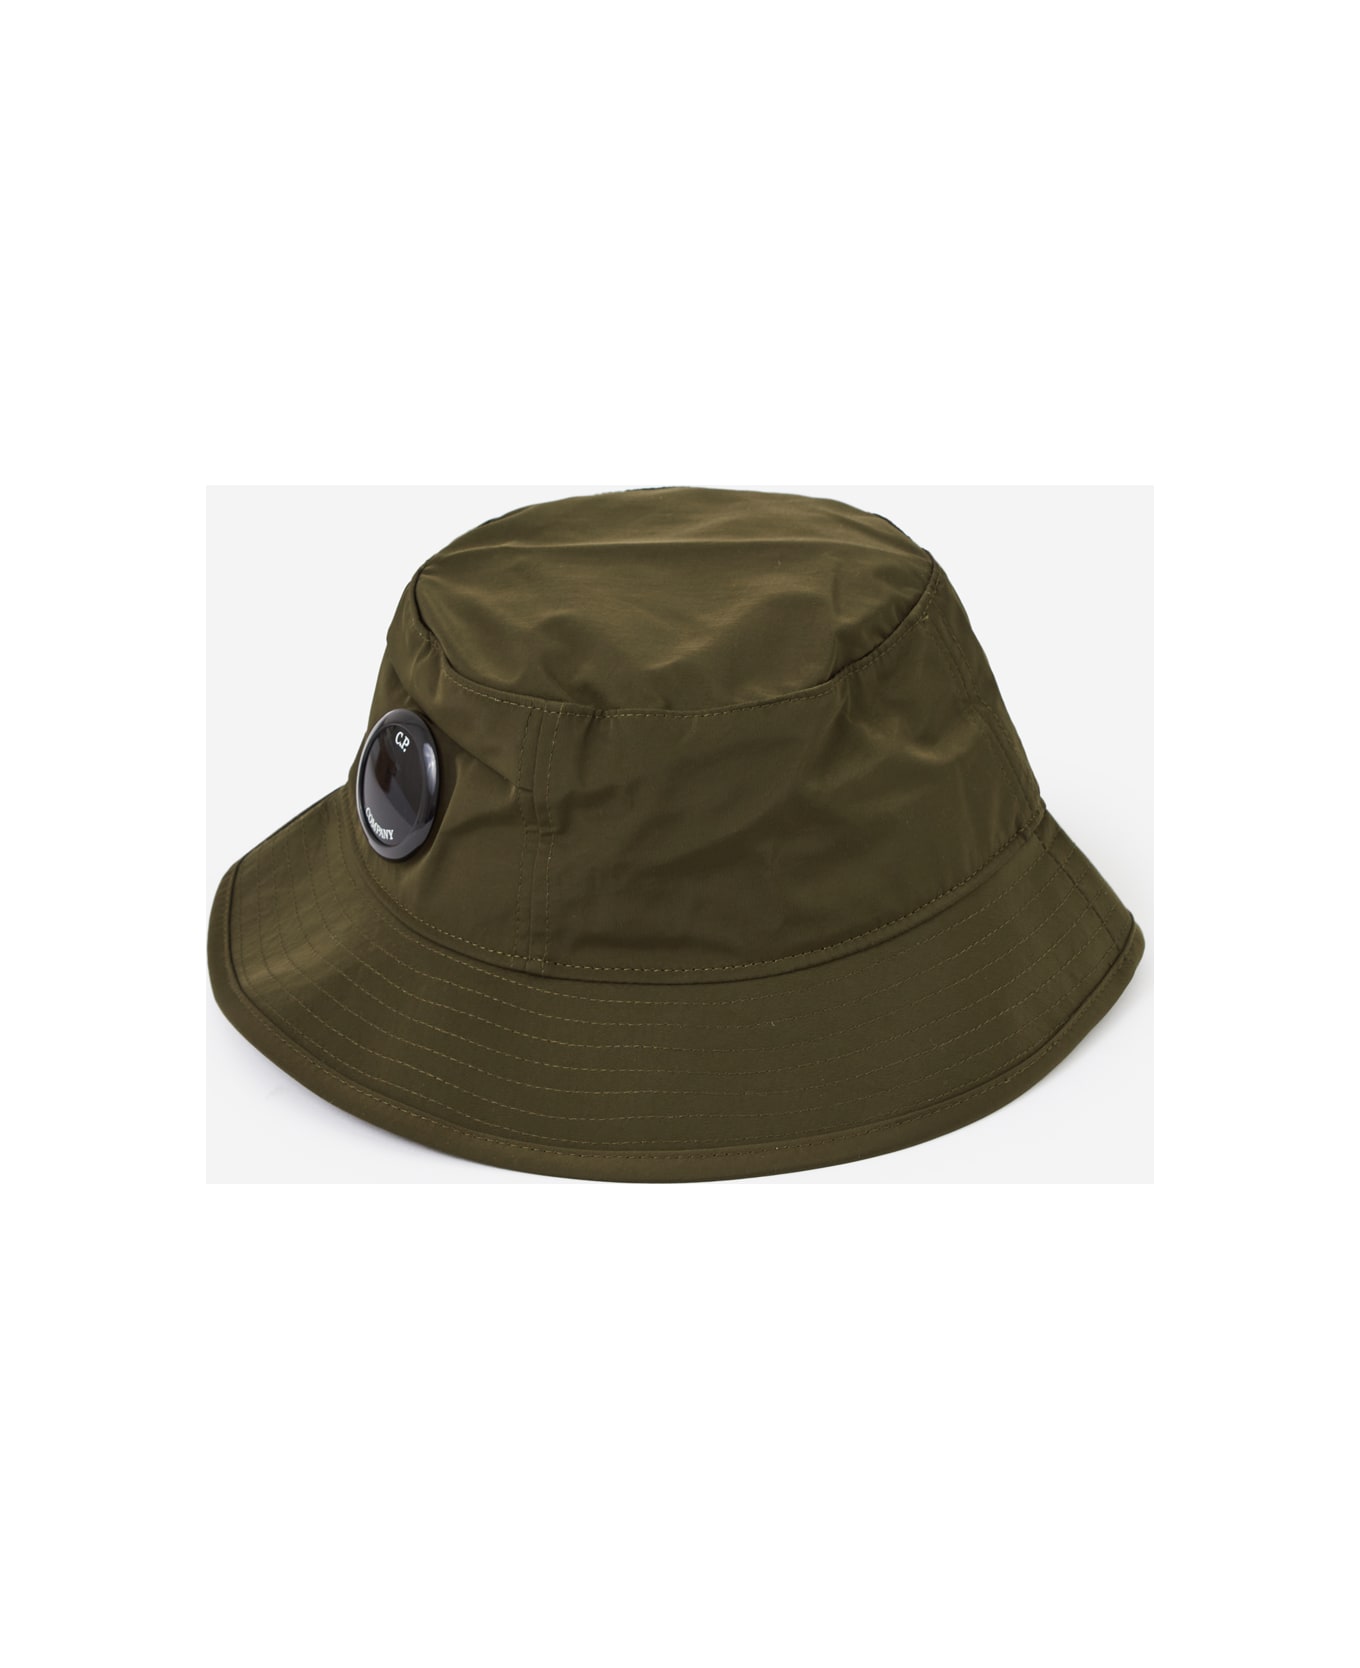 C.P. Company Hats - Verde 帽子